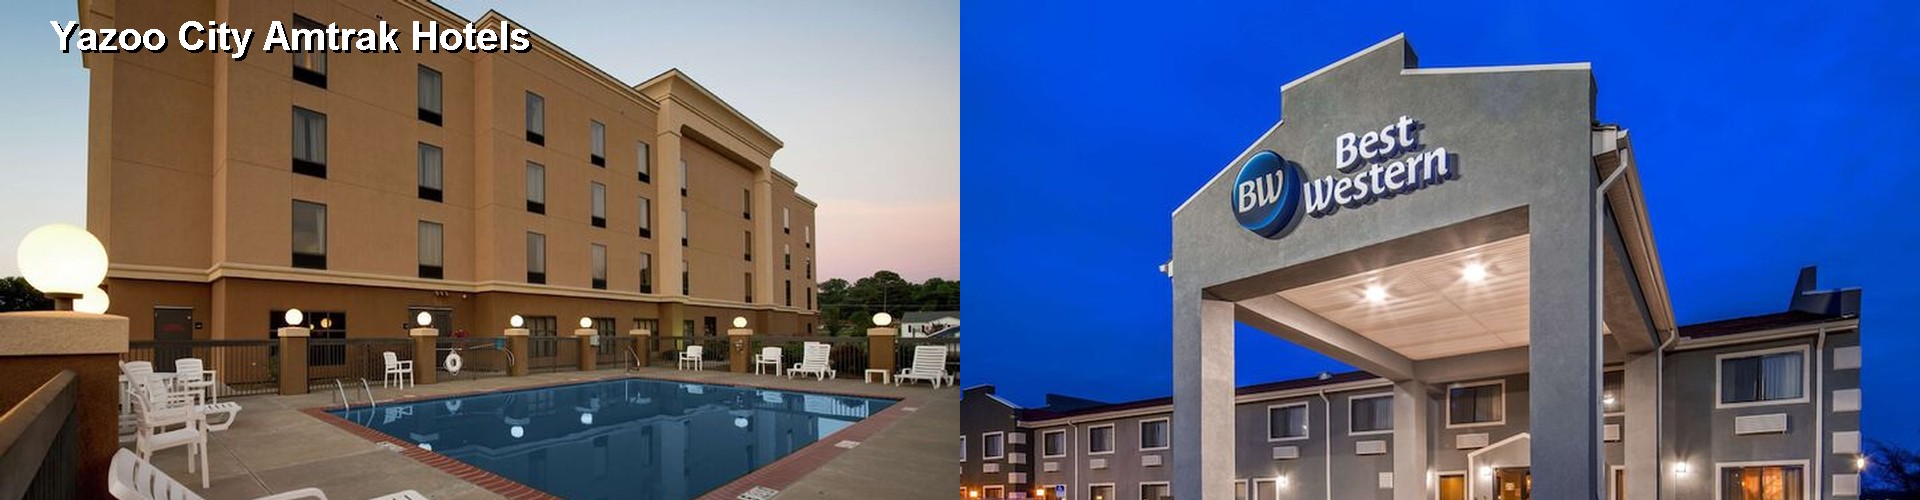 3 Best Hotels near Yazoo City Amtrak